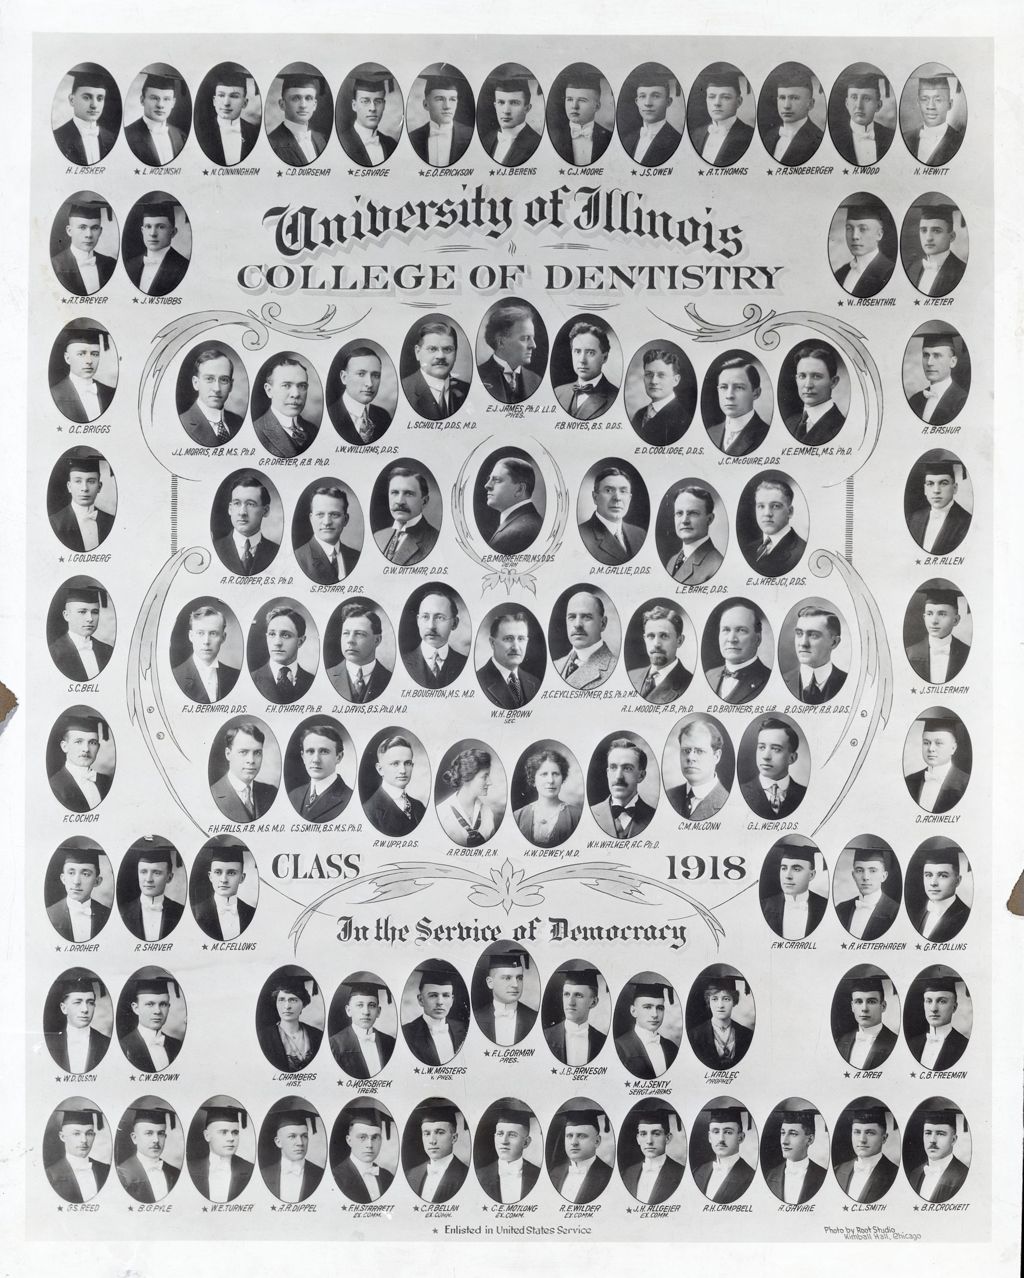 Miniature of 1918 graduating class, University of Illinois College of Dentistry